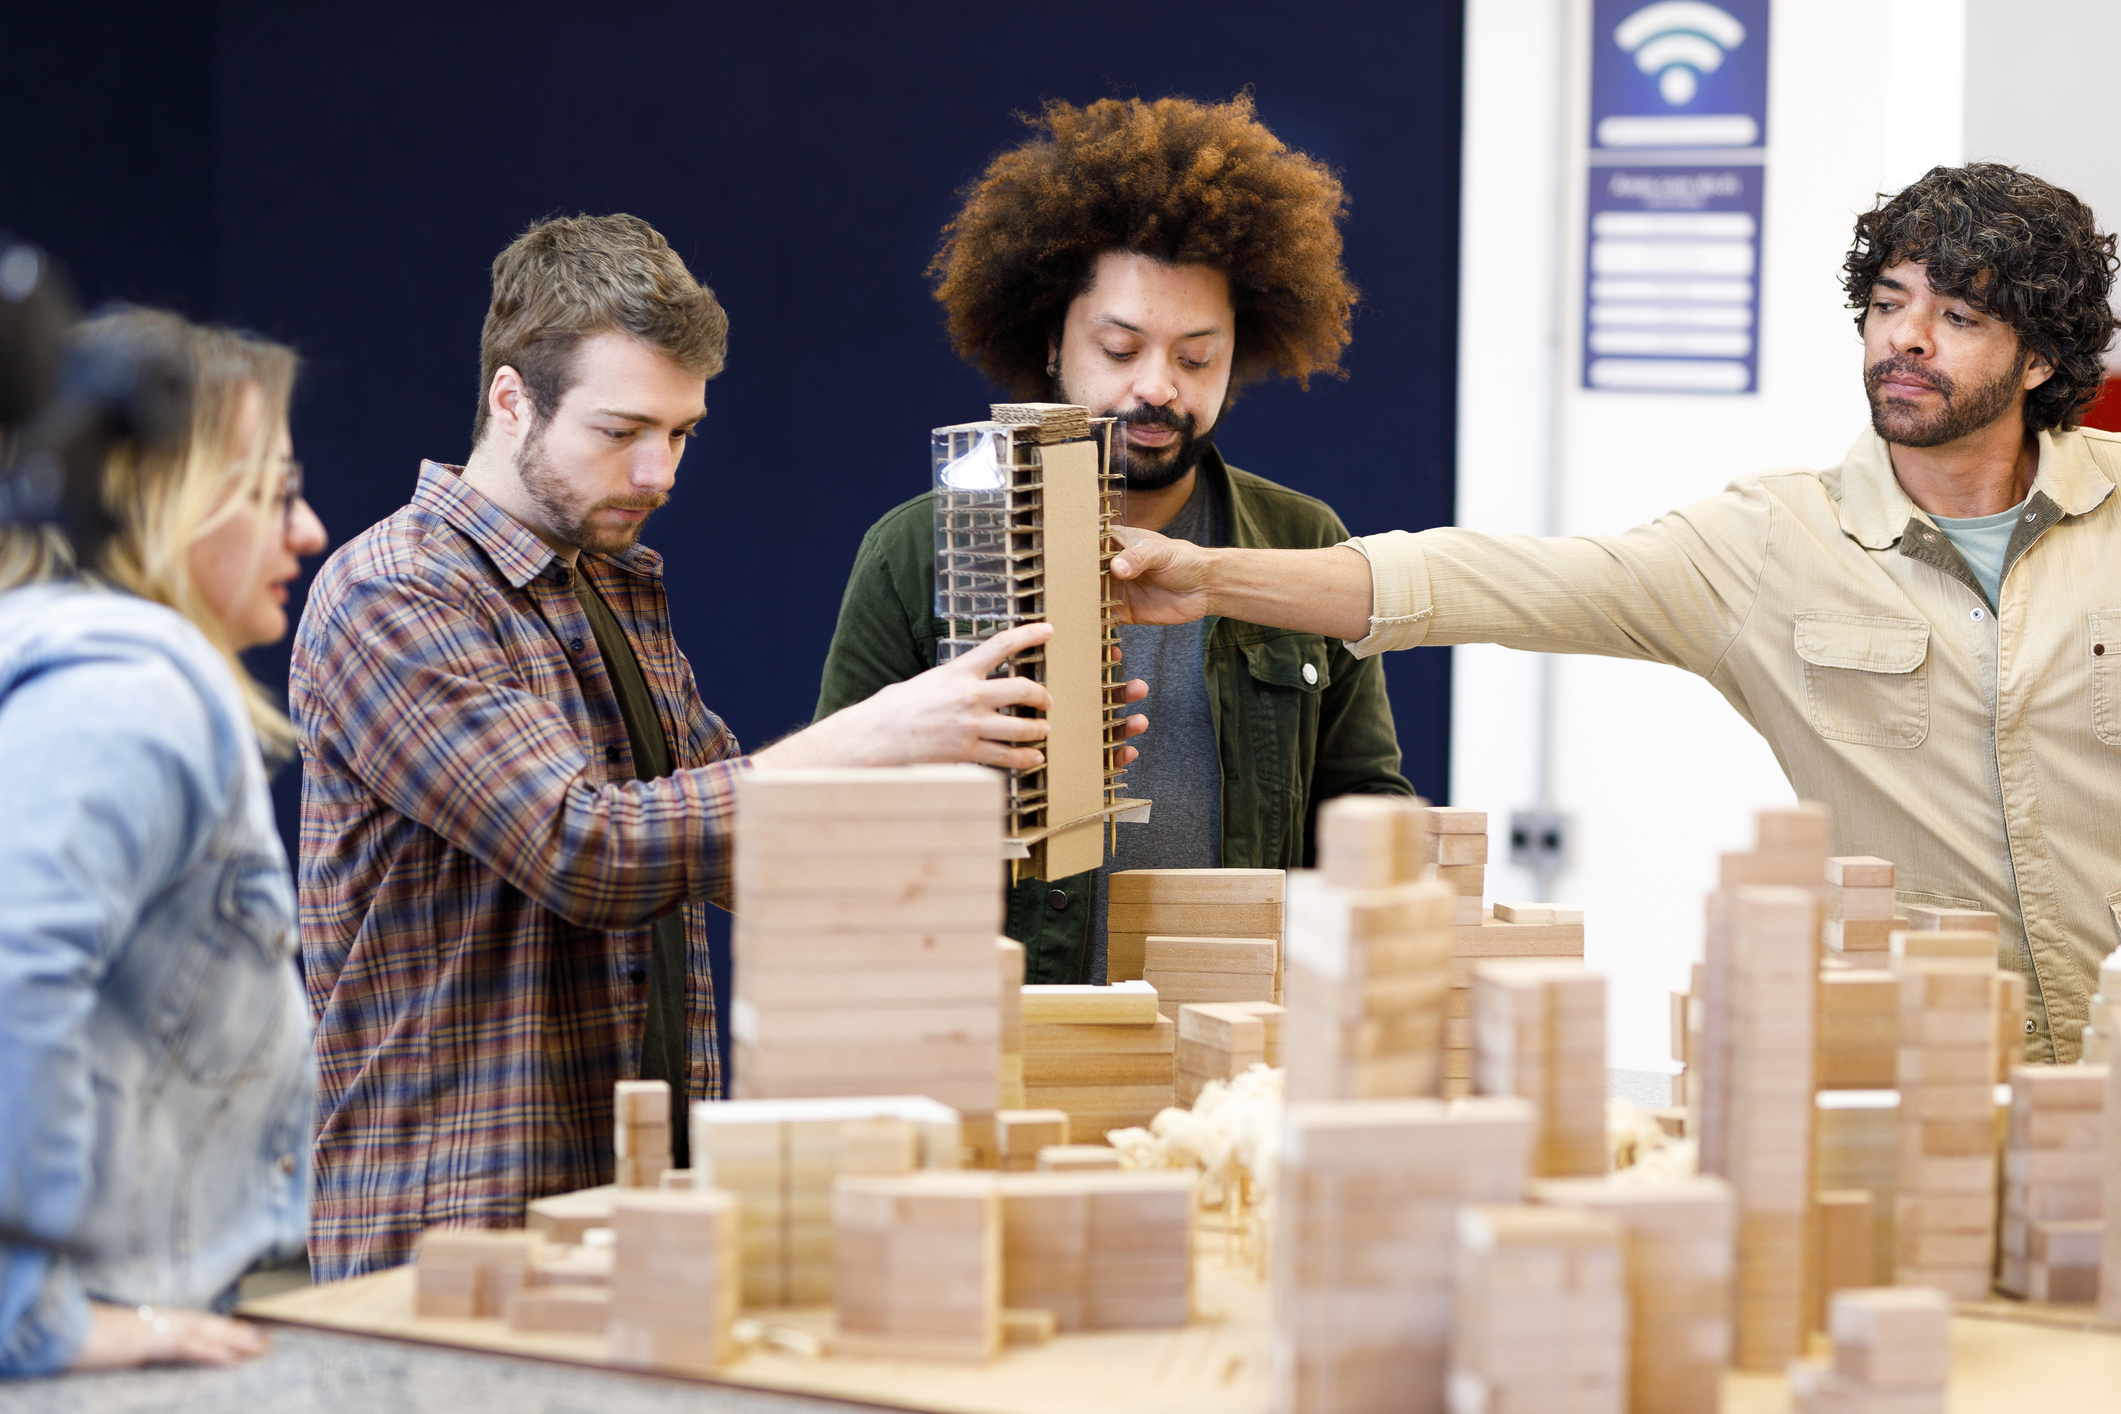 People looking at building model